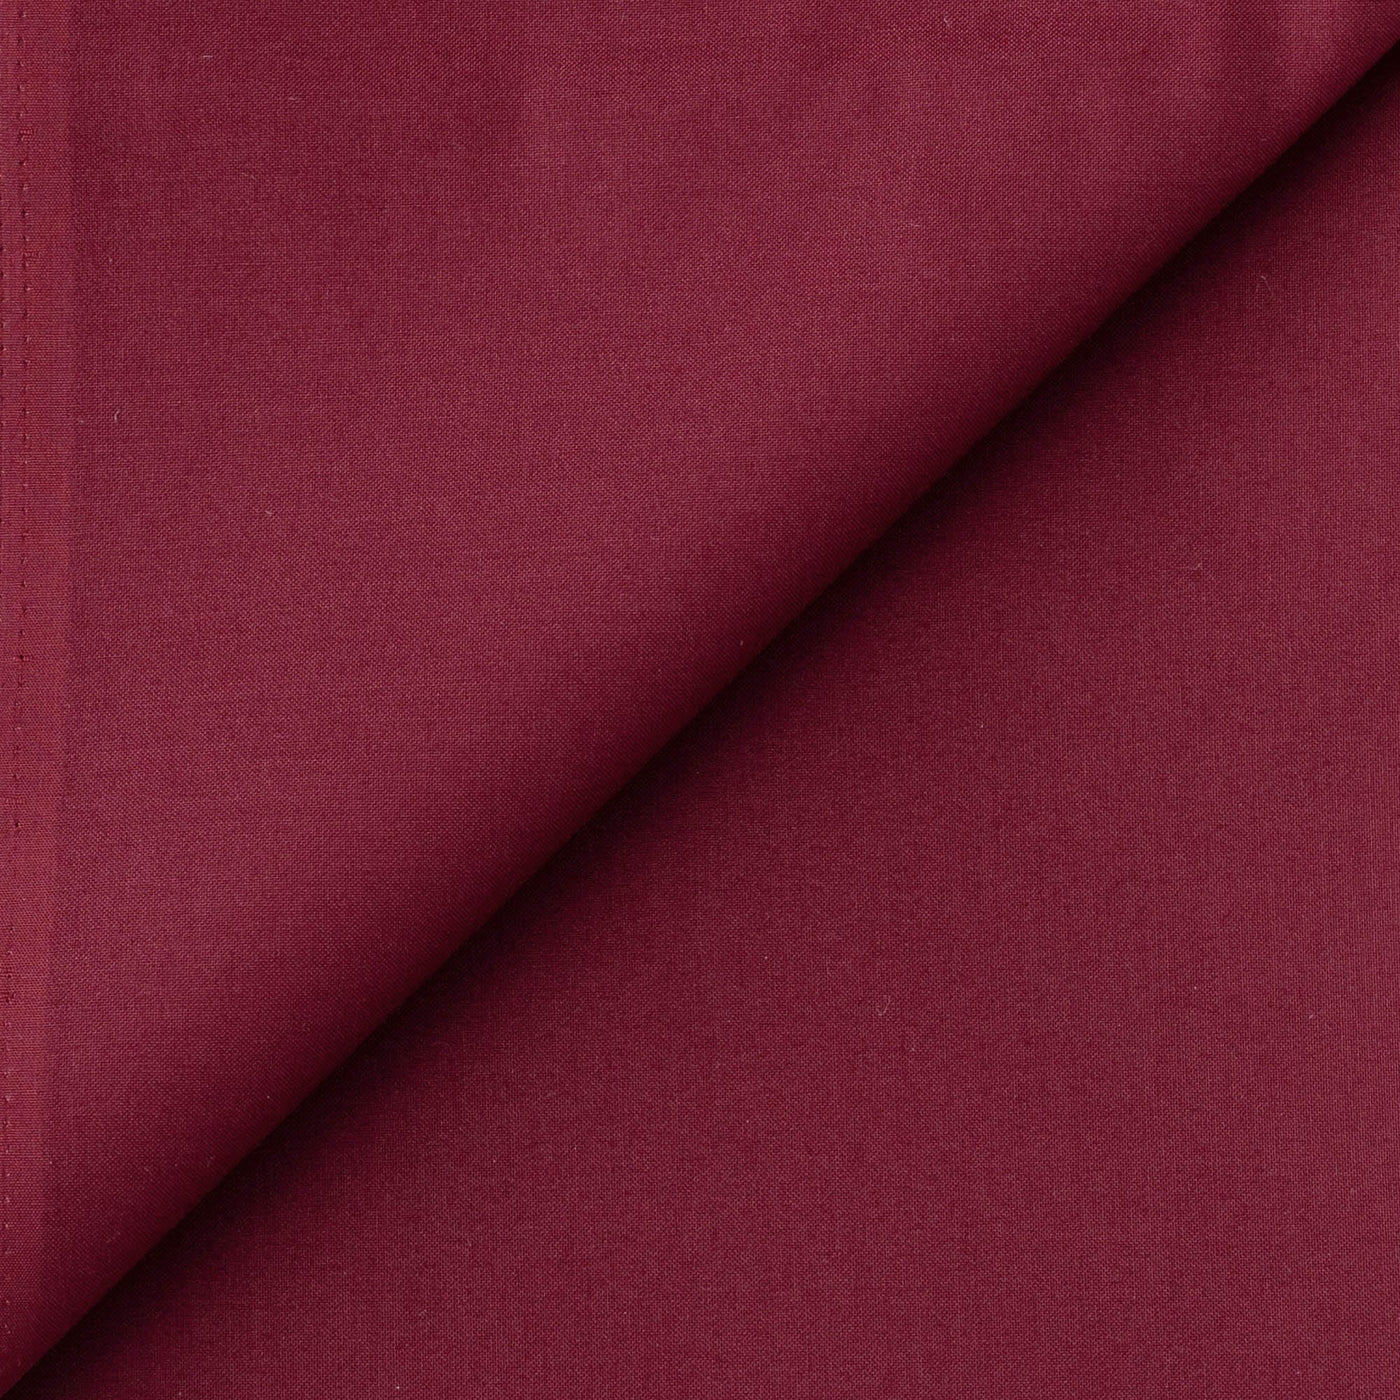 Fabric Pandit Fabric Regular Full Shirt (1.6 mts) Men's Pale Red Cotton Poplin Shirting Fabric (Width 58 inch)